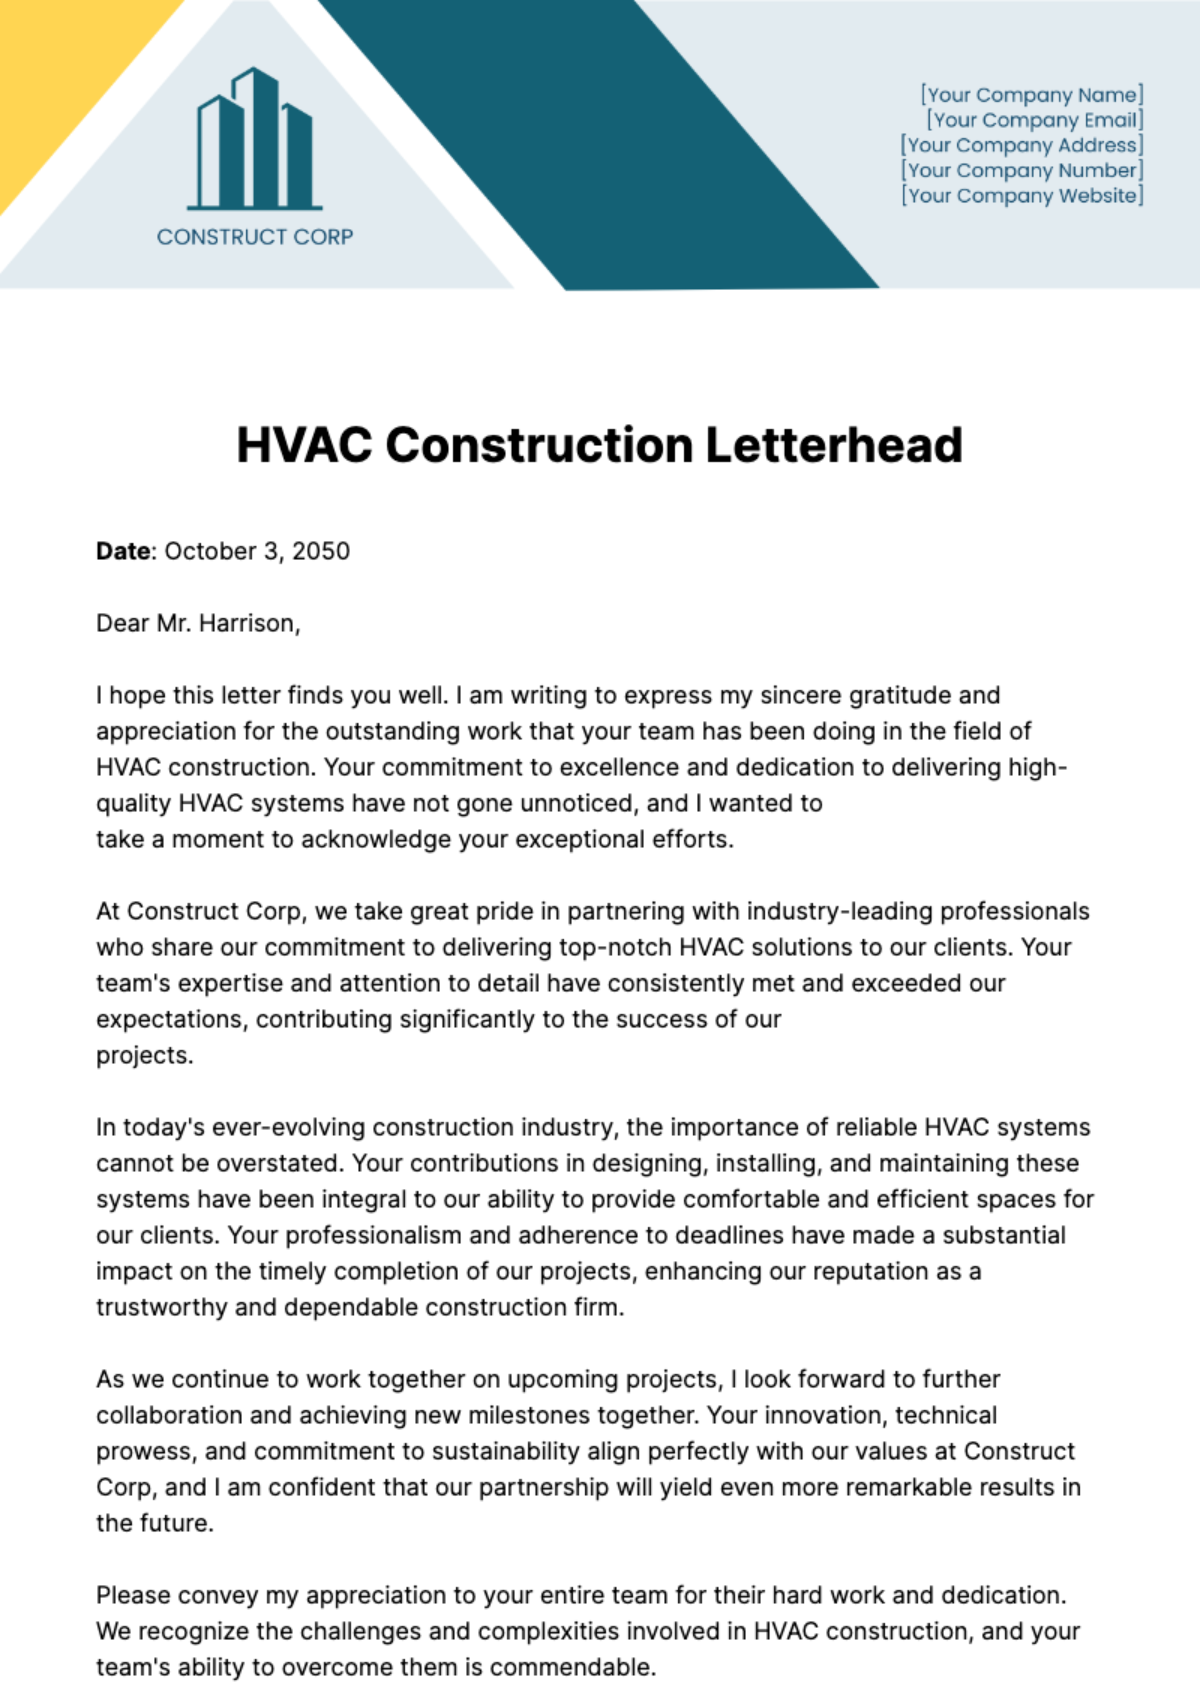 HVAC Construction Letterhead Template